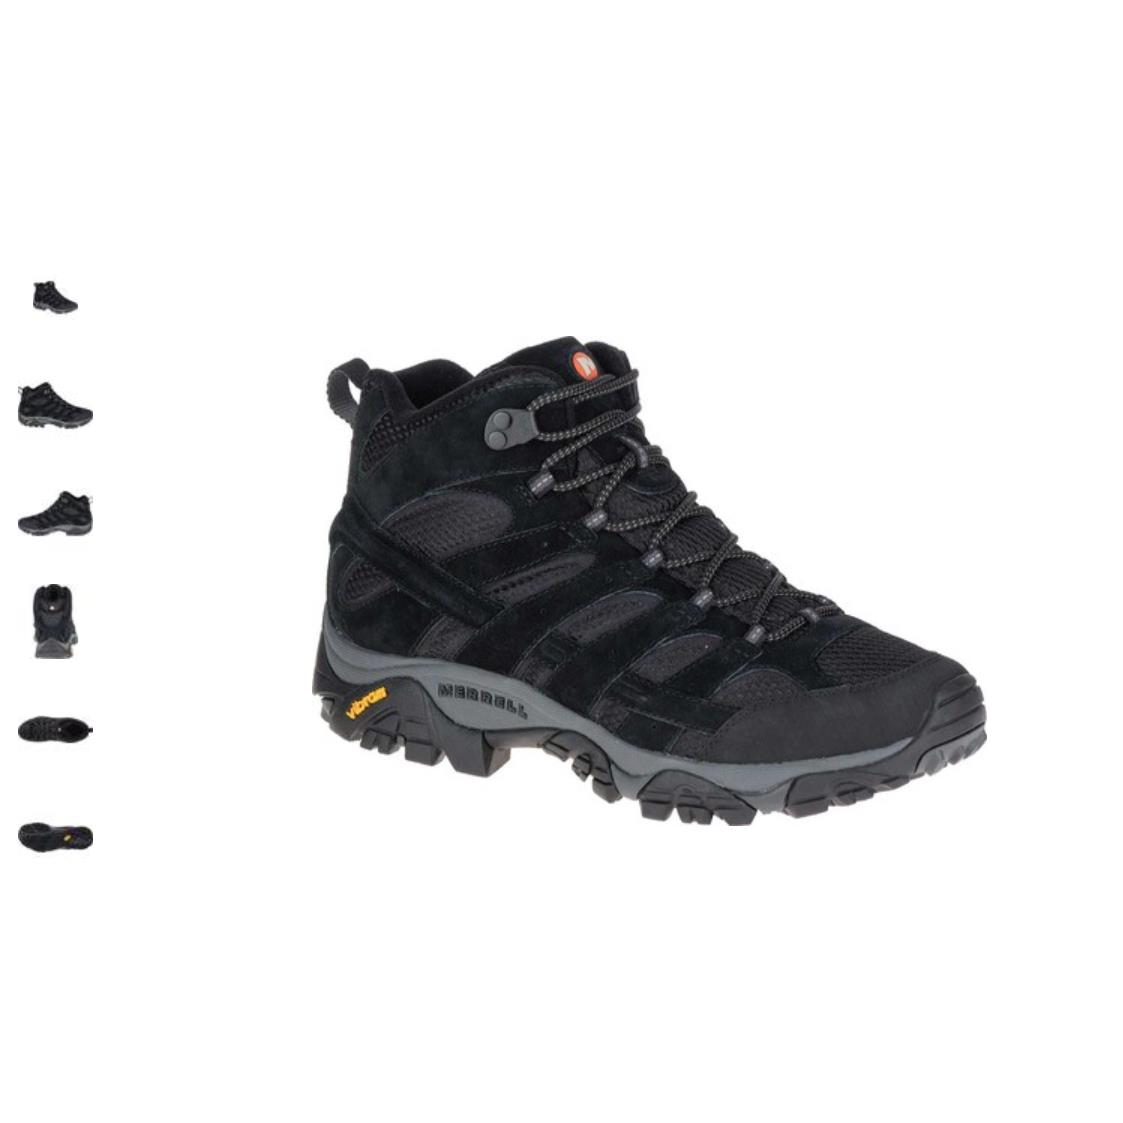 Merrell Moab 2 Vent Ventilator Mid Black Night Hiking Boot Men`s Sizes 7-14 Wide